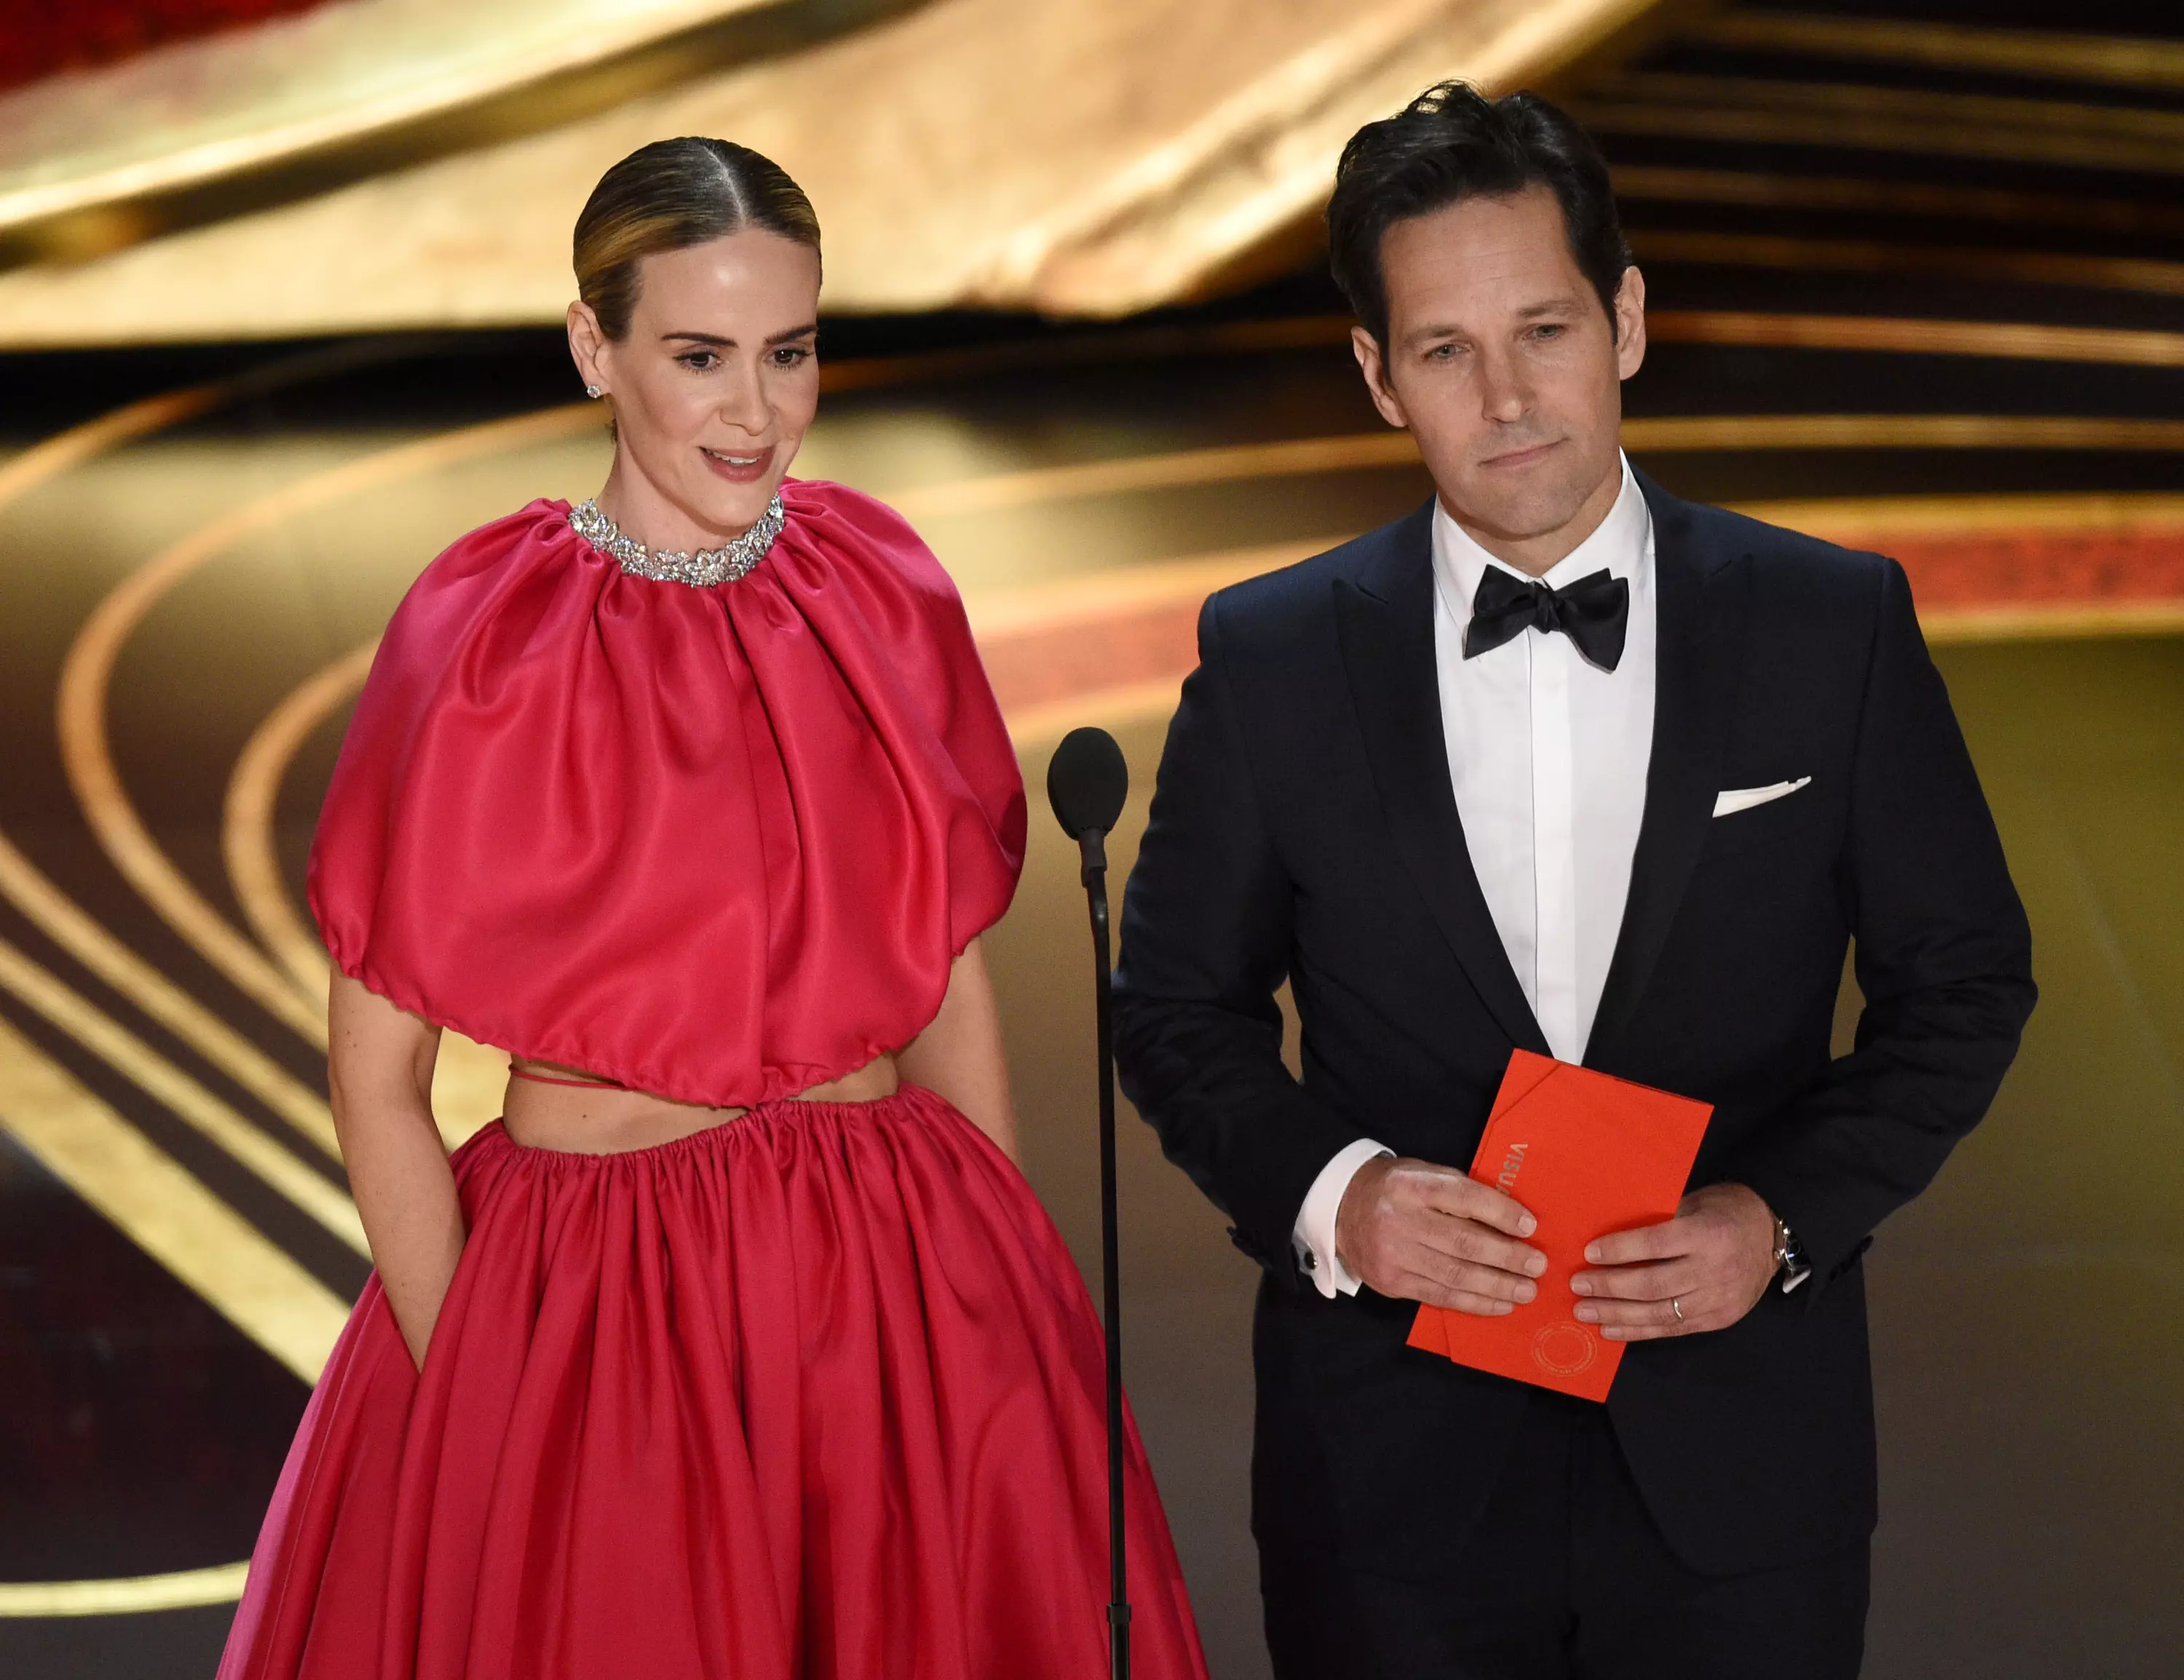 Paul Rudd and Sarah Paulson presented an award at tonight's Oscars.